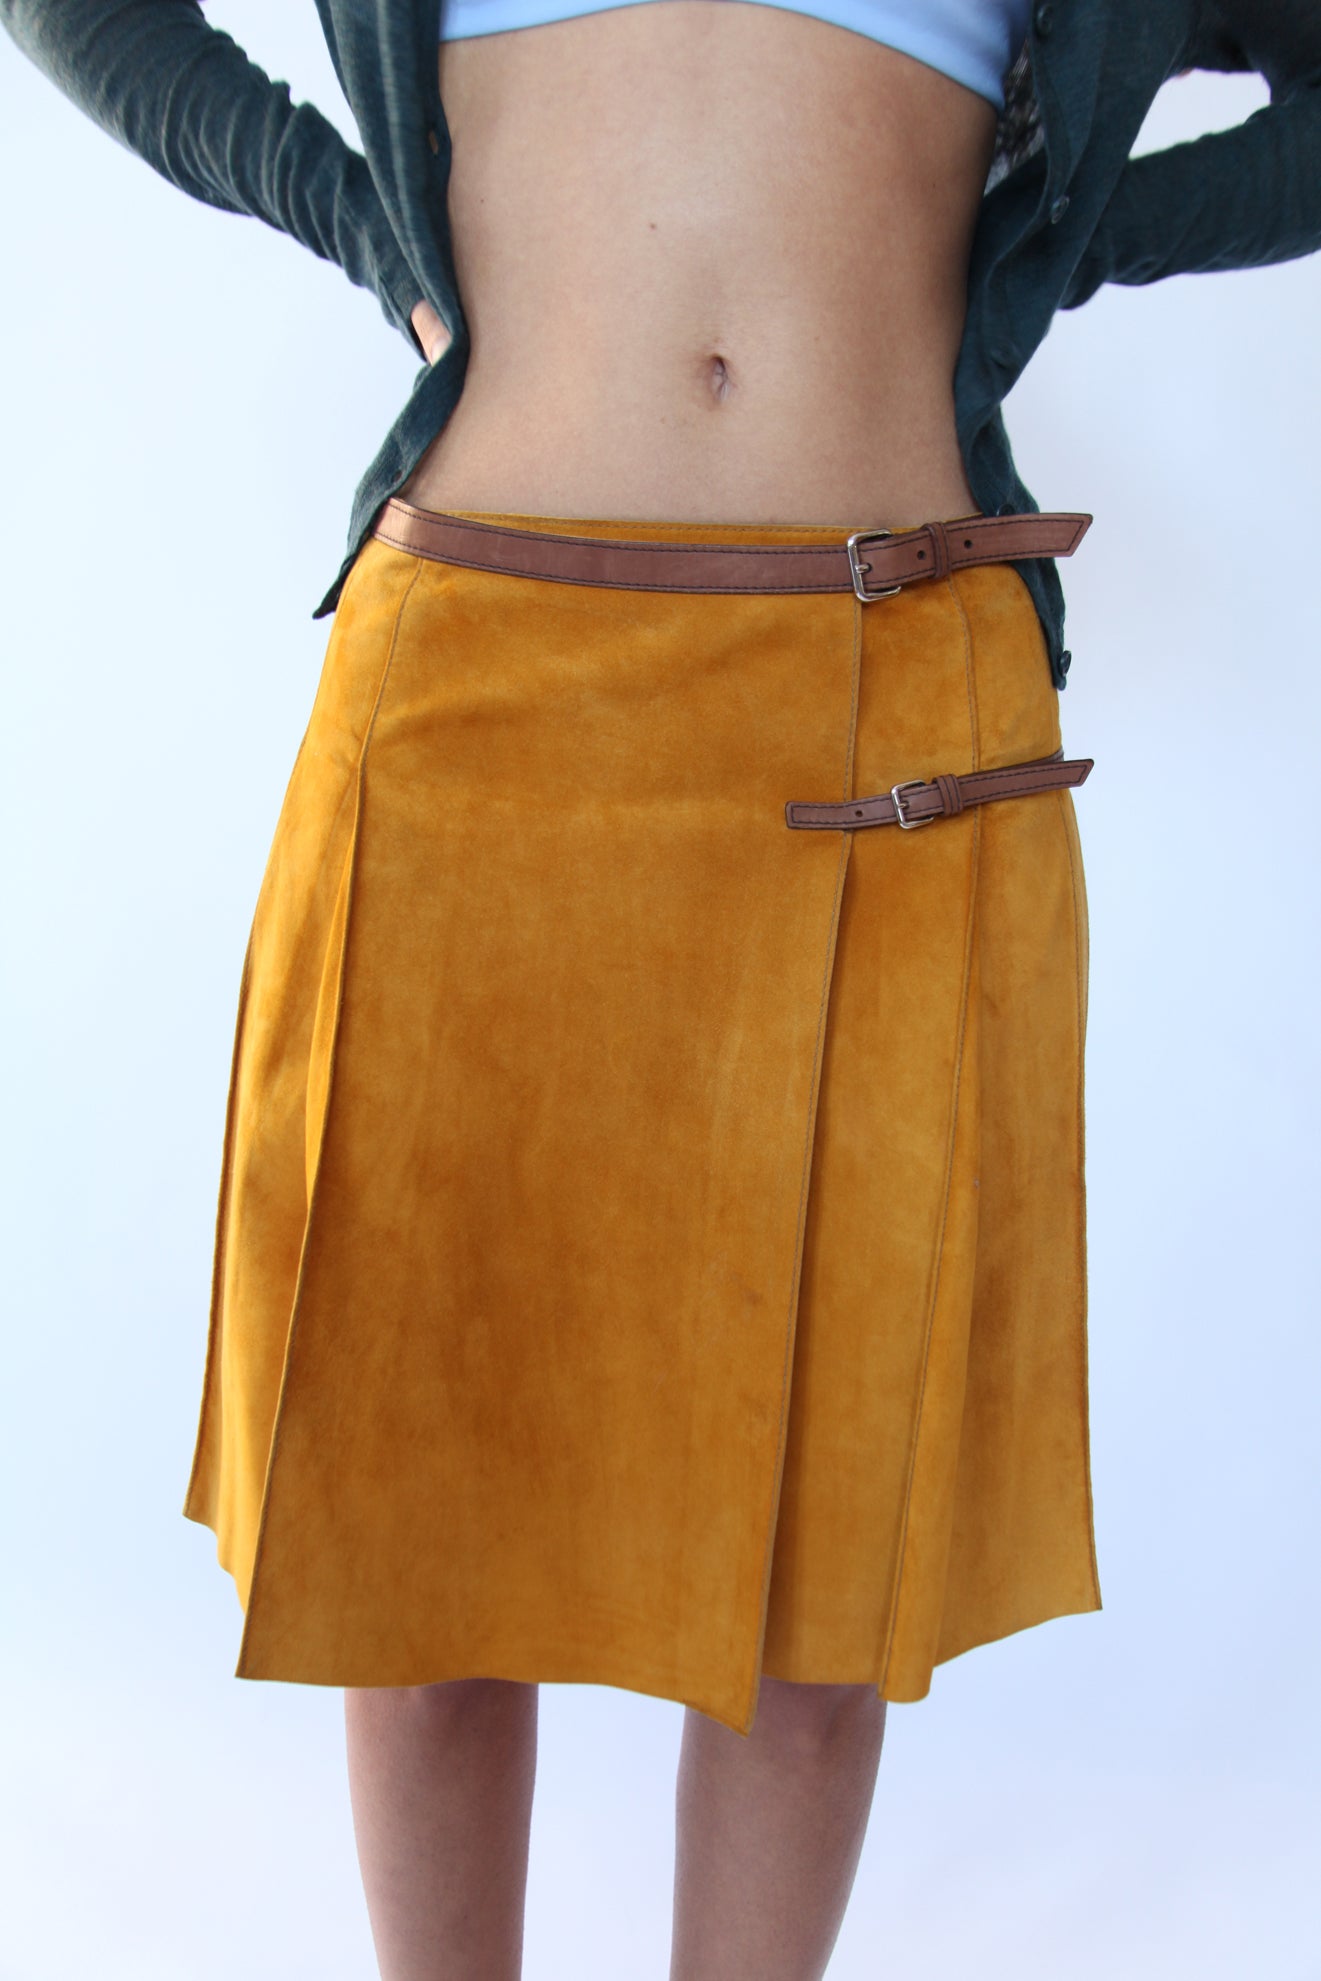 Prada Spring 2005 Skirt